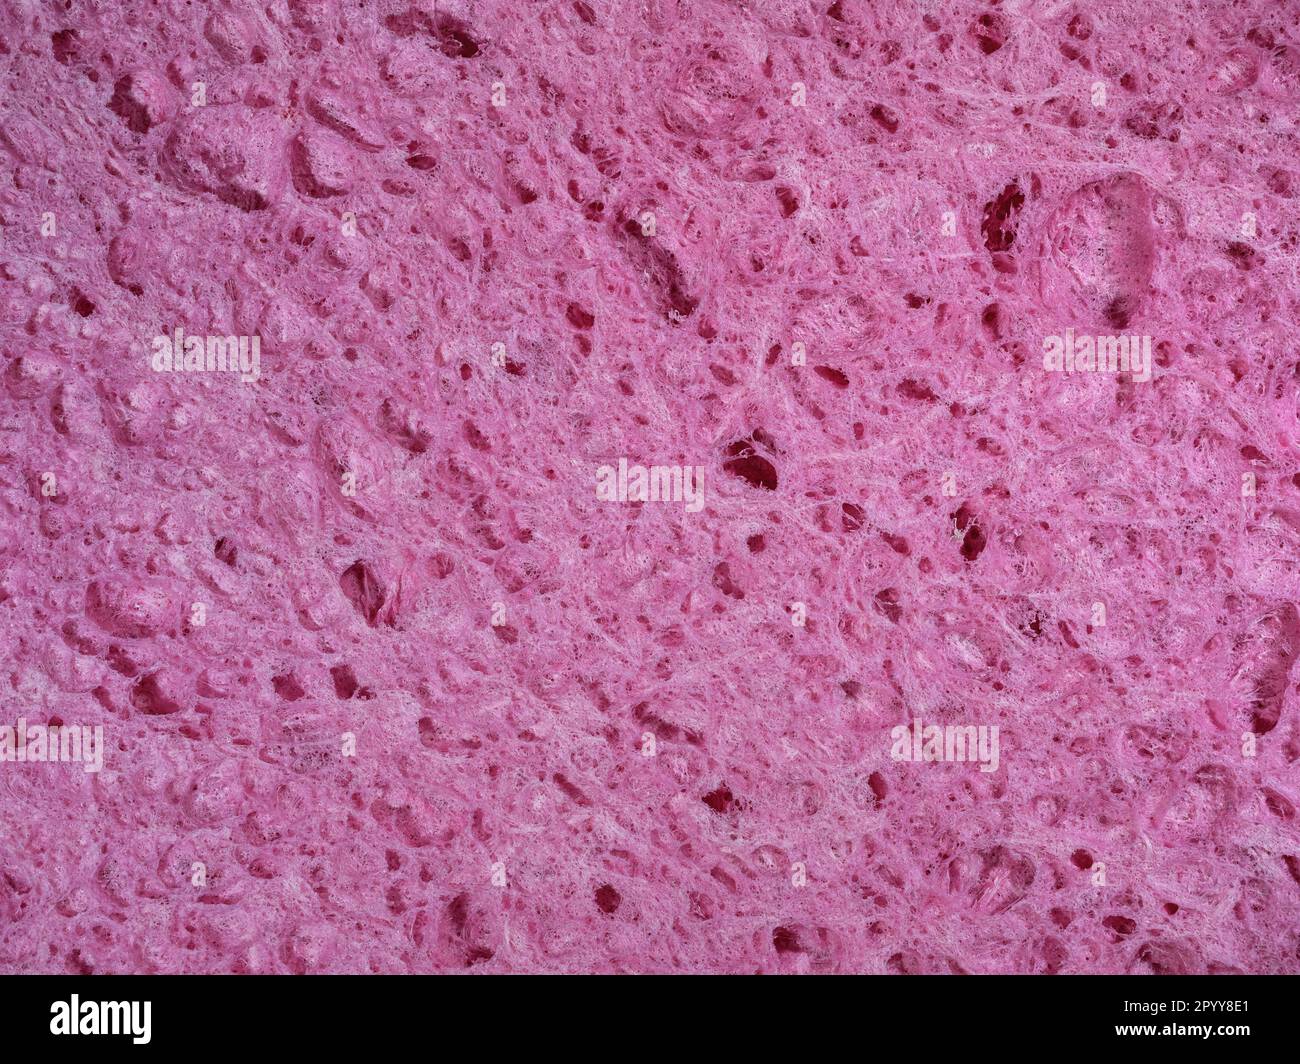 https://c8.alamy.com/comp/2PYY8E1/rough-texture-of-pink-sponge-abstract-close-up-background-2PYY8E1.jpg